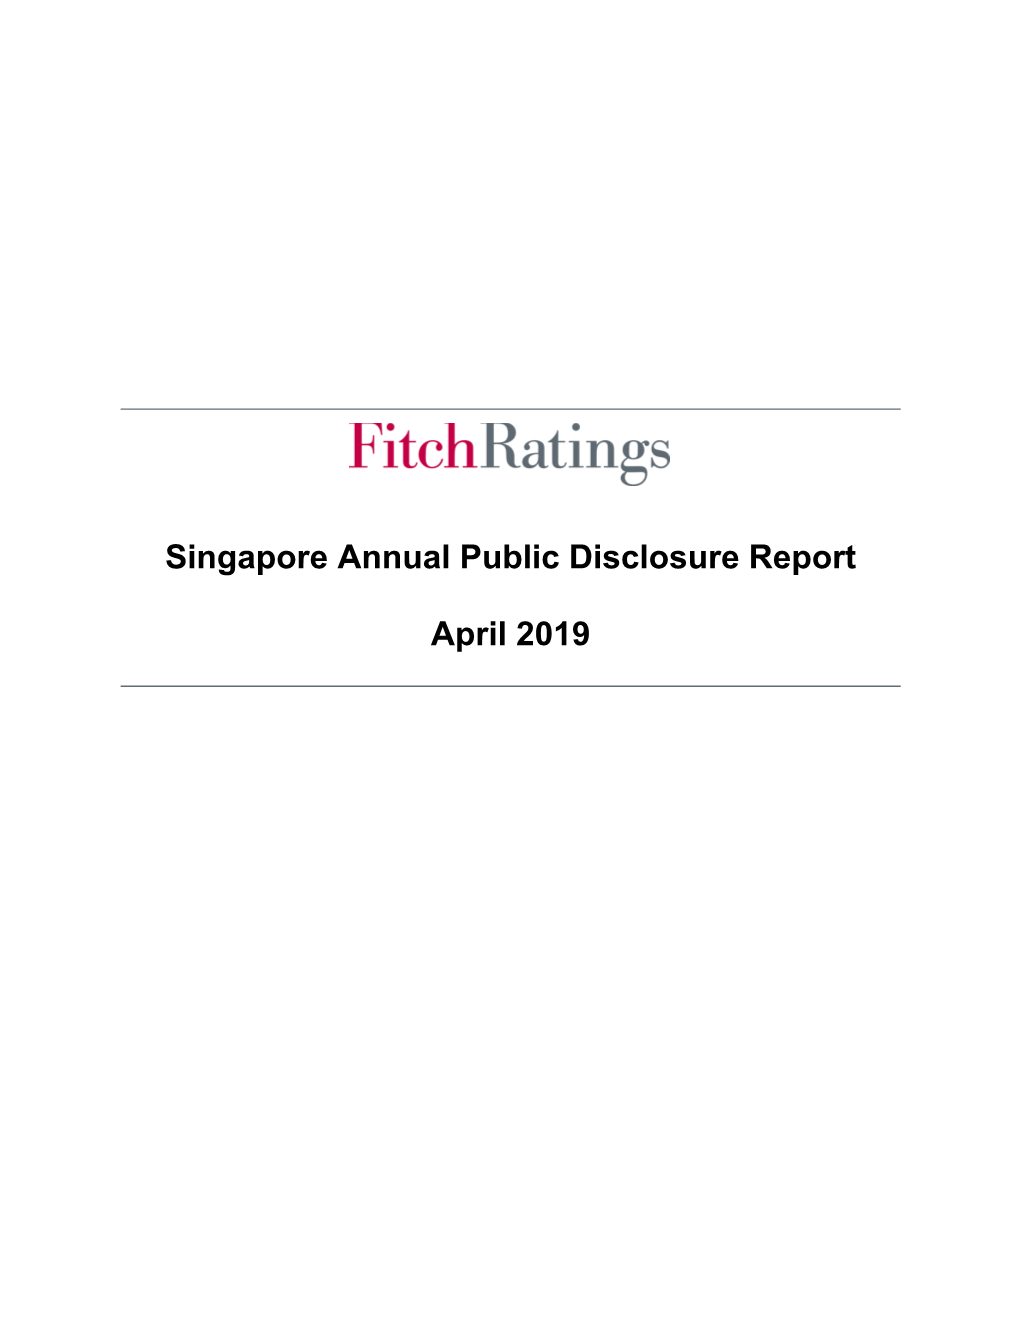 Singapore Annual Public Disclosure Report April 2019